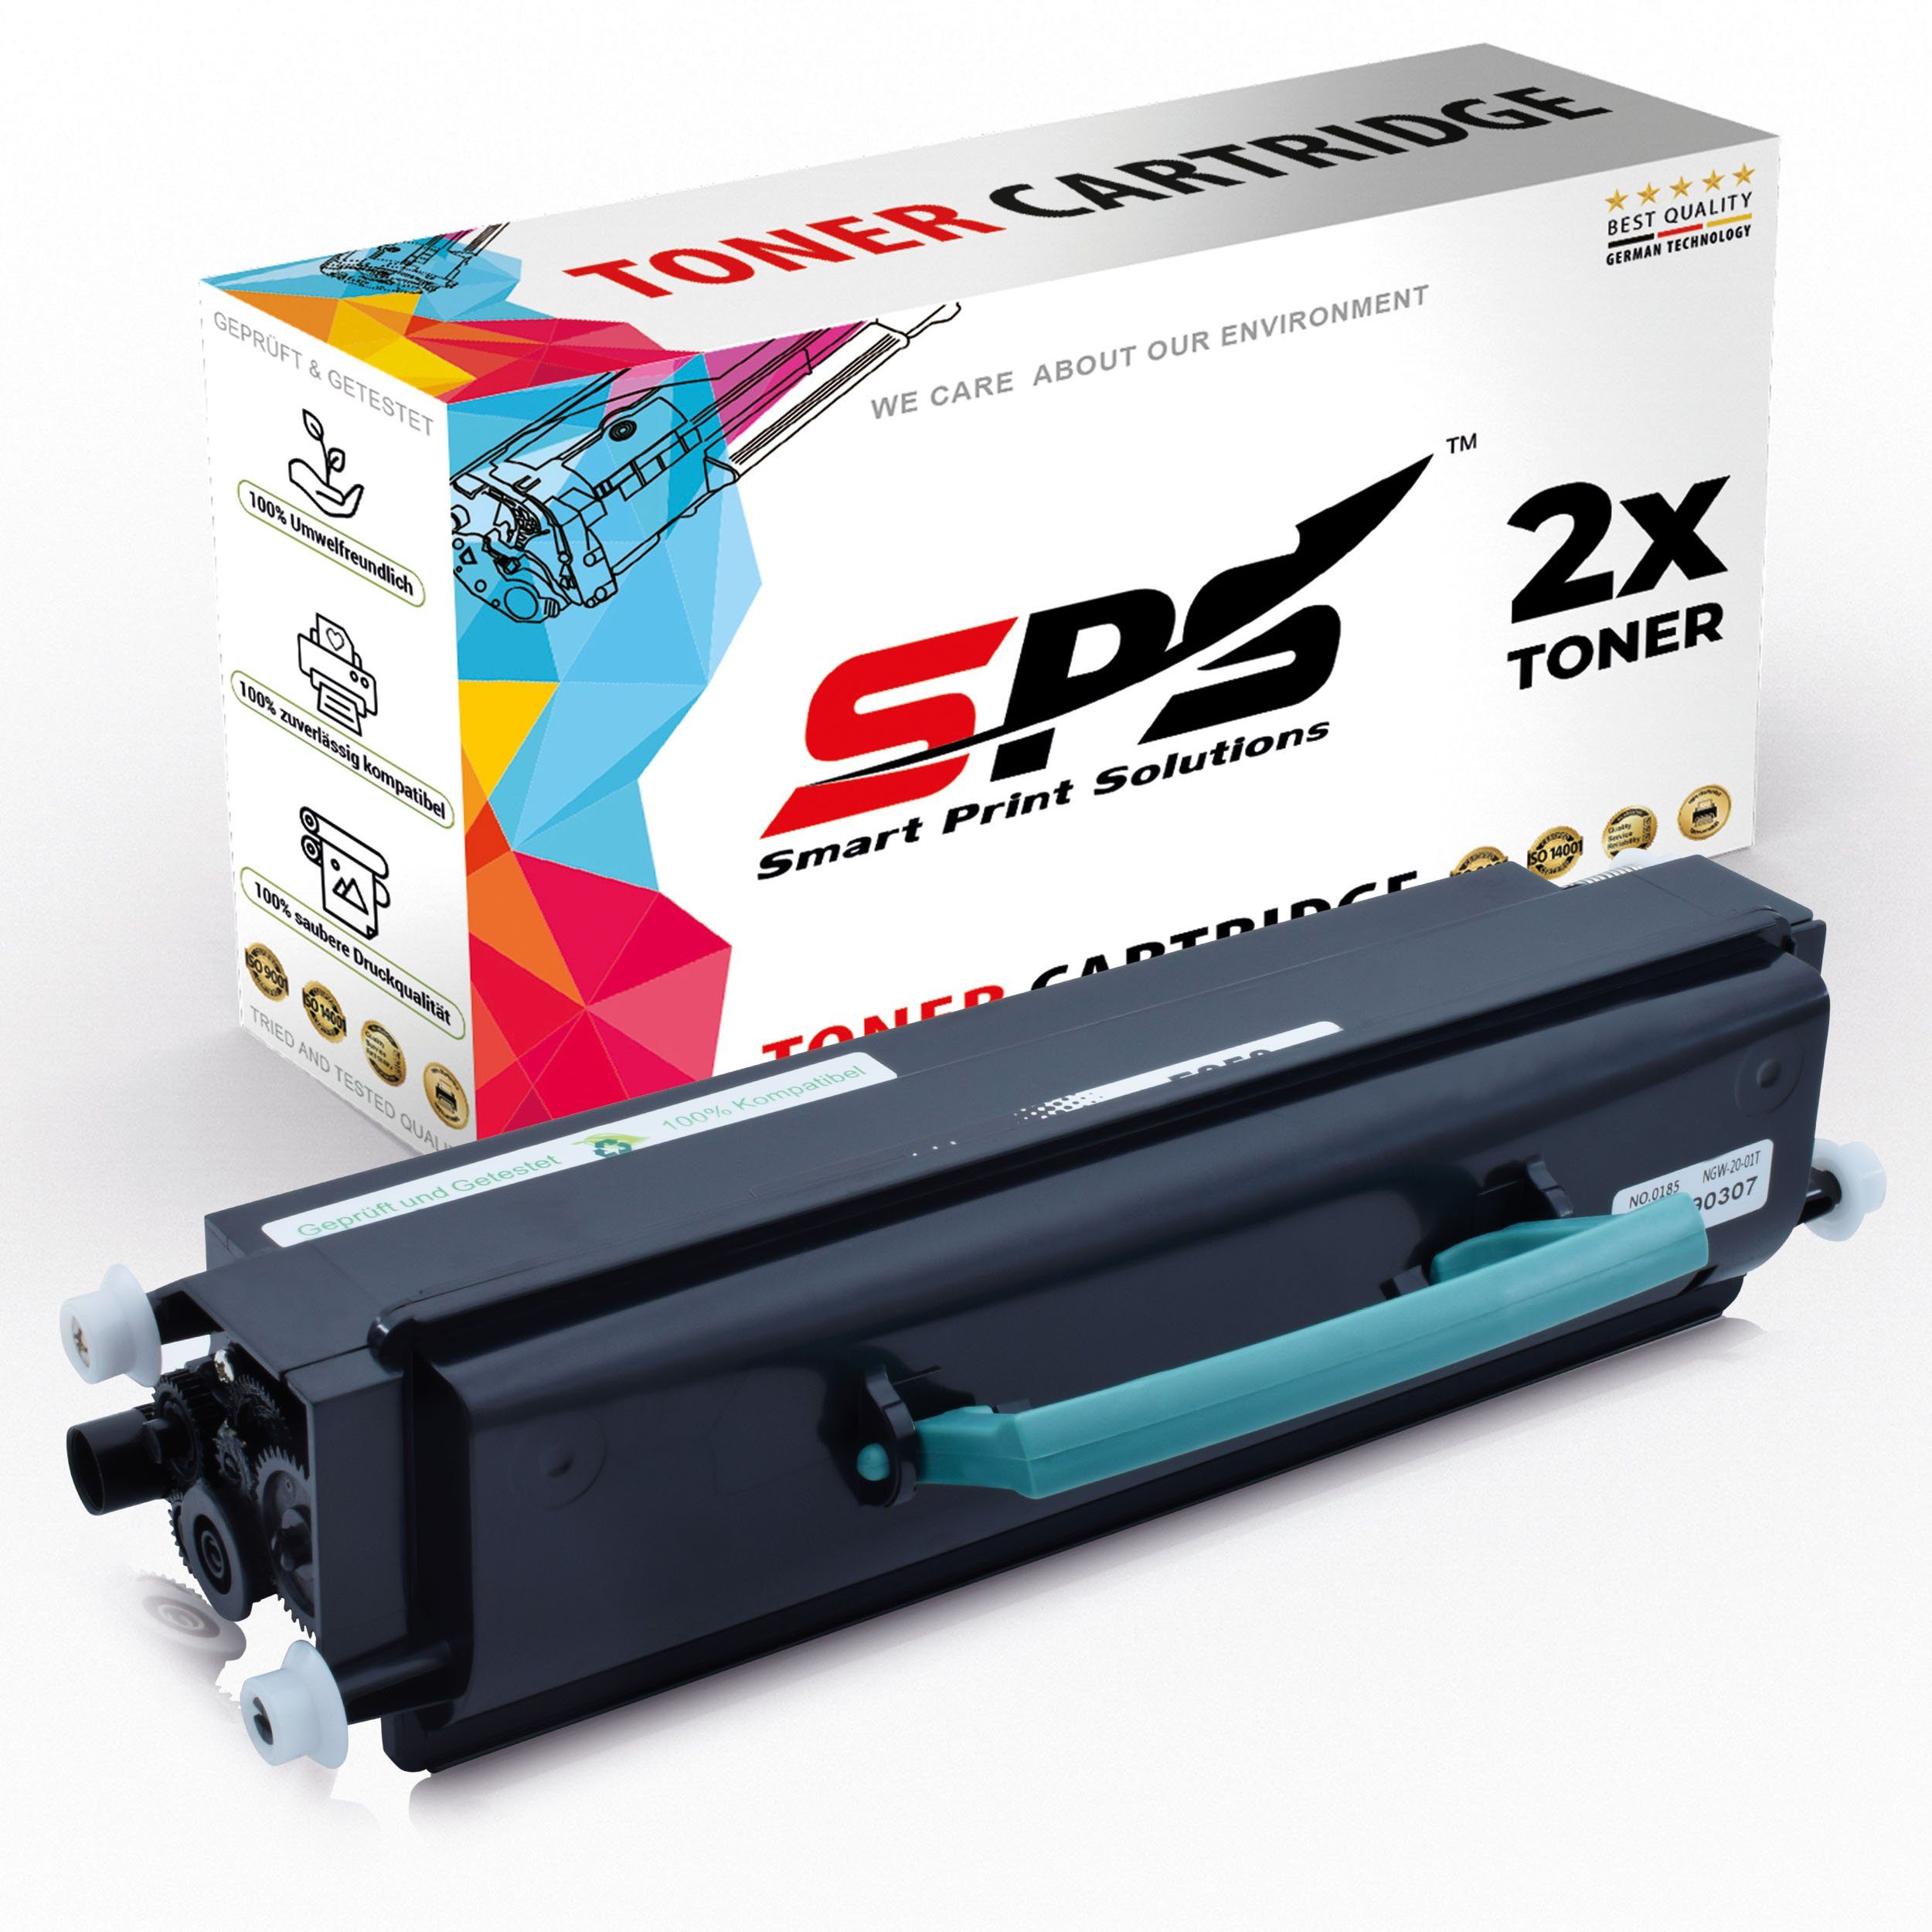 Kaufen Sie beliebte Artikel online SPS Tonerkartusche für (2er Pack) E250A21E, Kompatibel E350 Lexmark